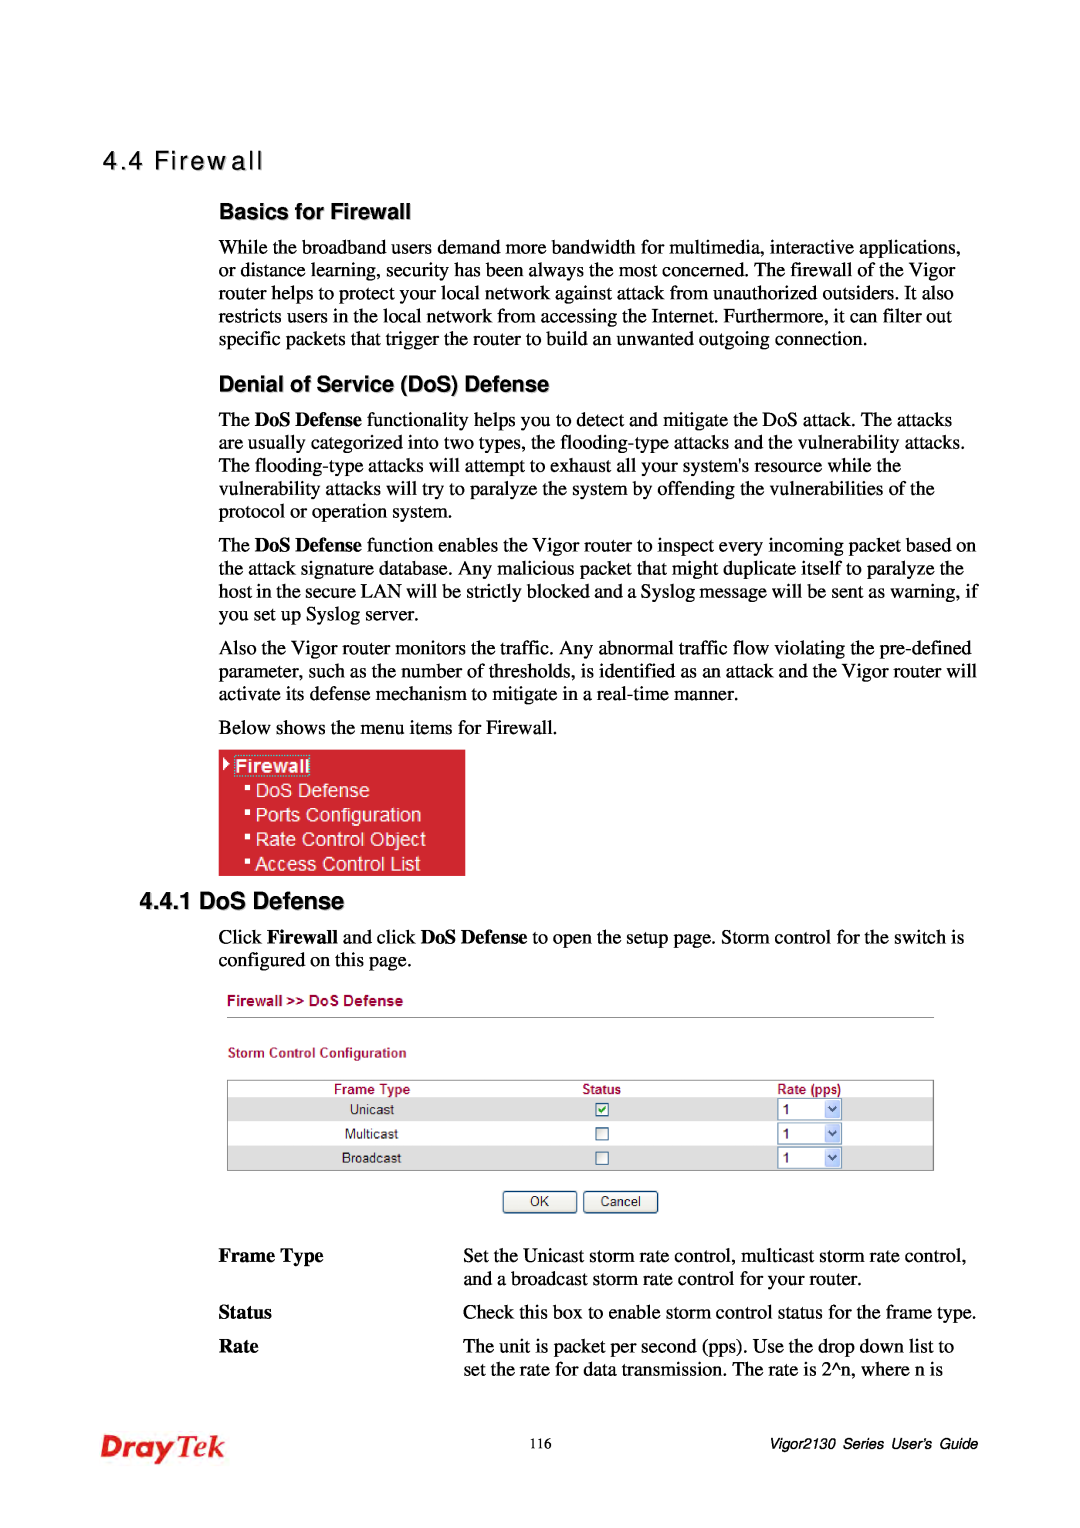 Draytek 2130 manual Basics for Firewall, Denial of Service DoS Defense 